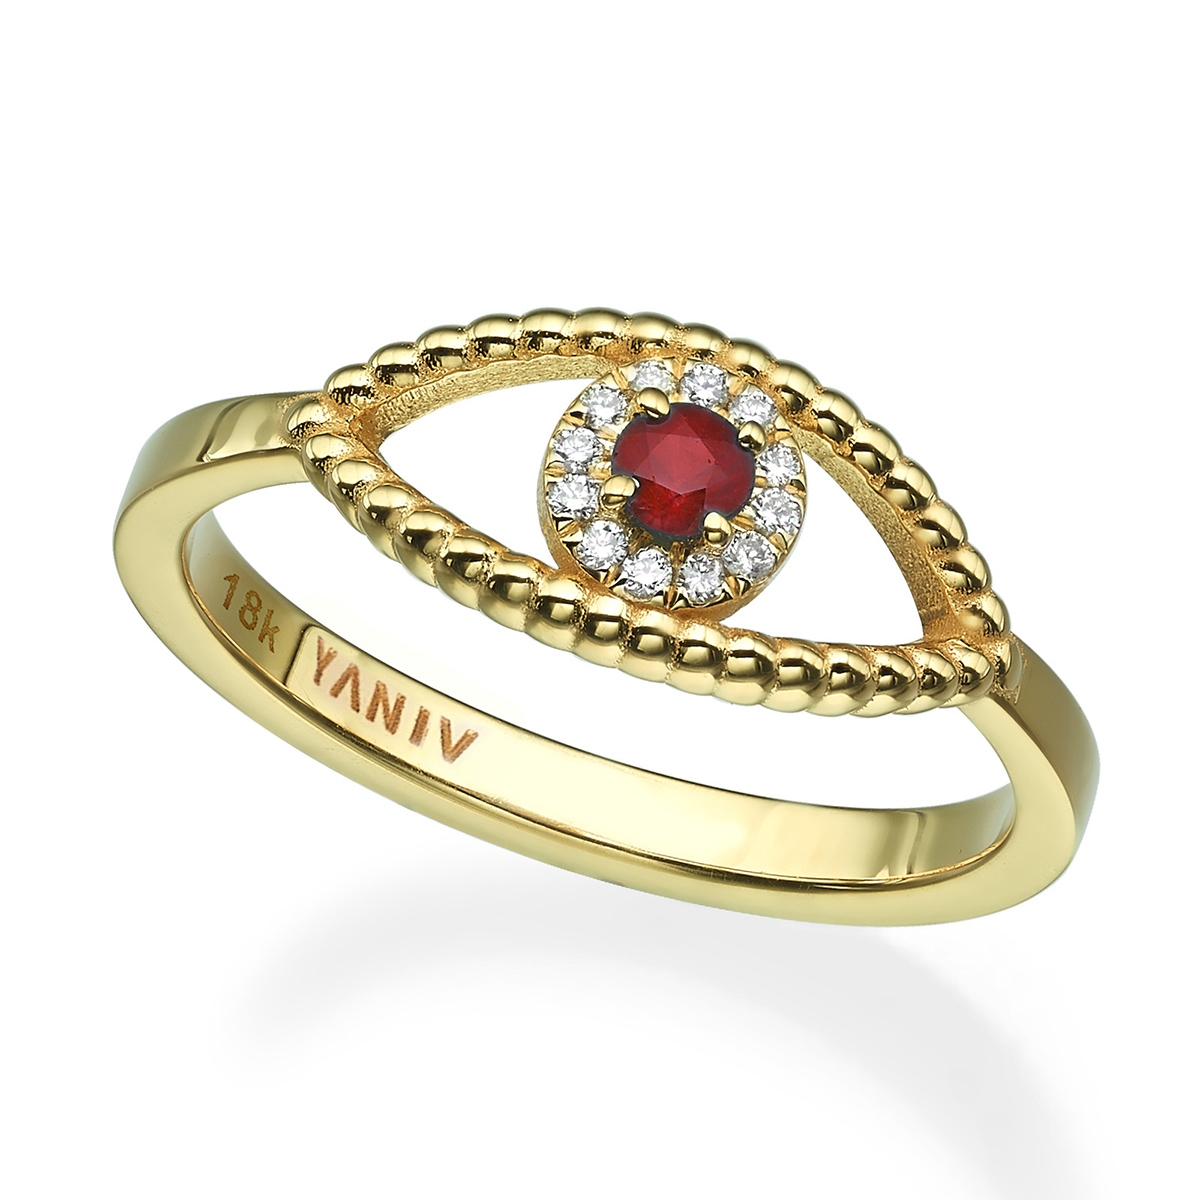 Yaniv Fine Jewelry 18K Gold Evil Eye Ring with Ruby Stone - 1